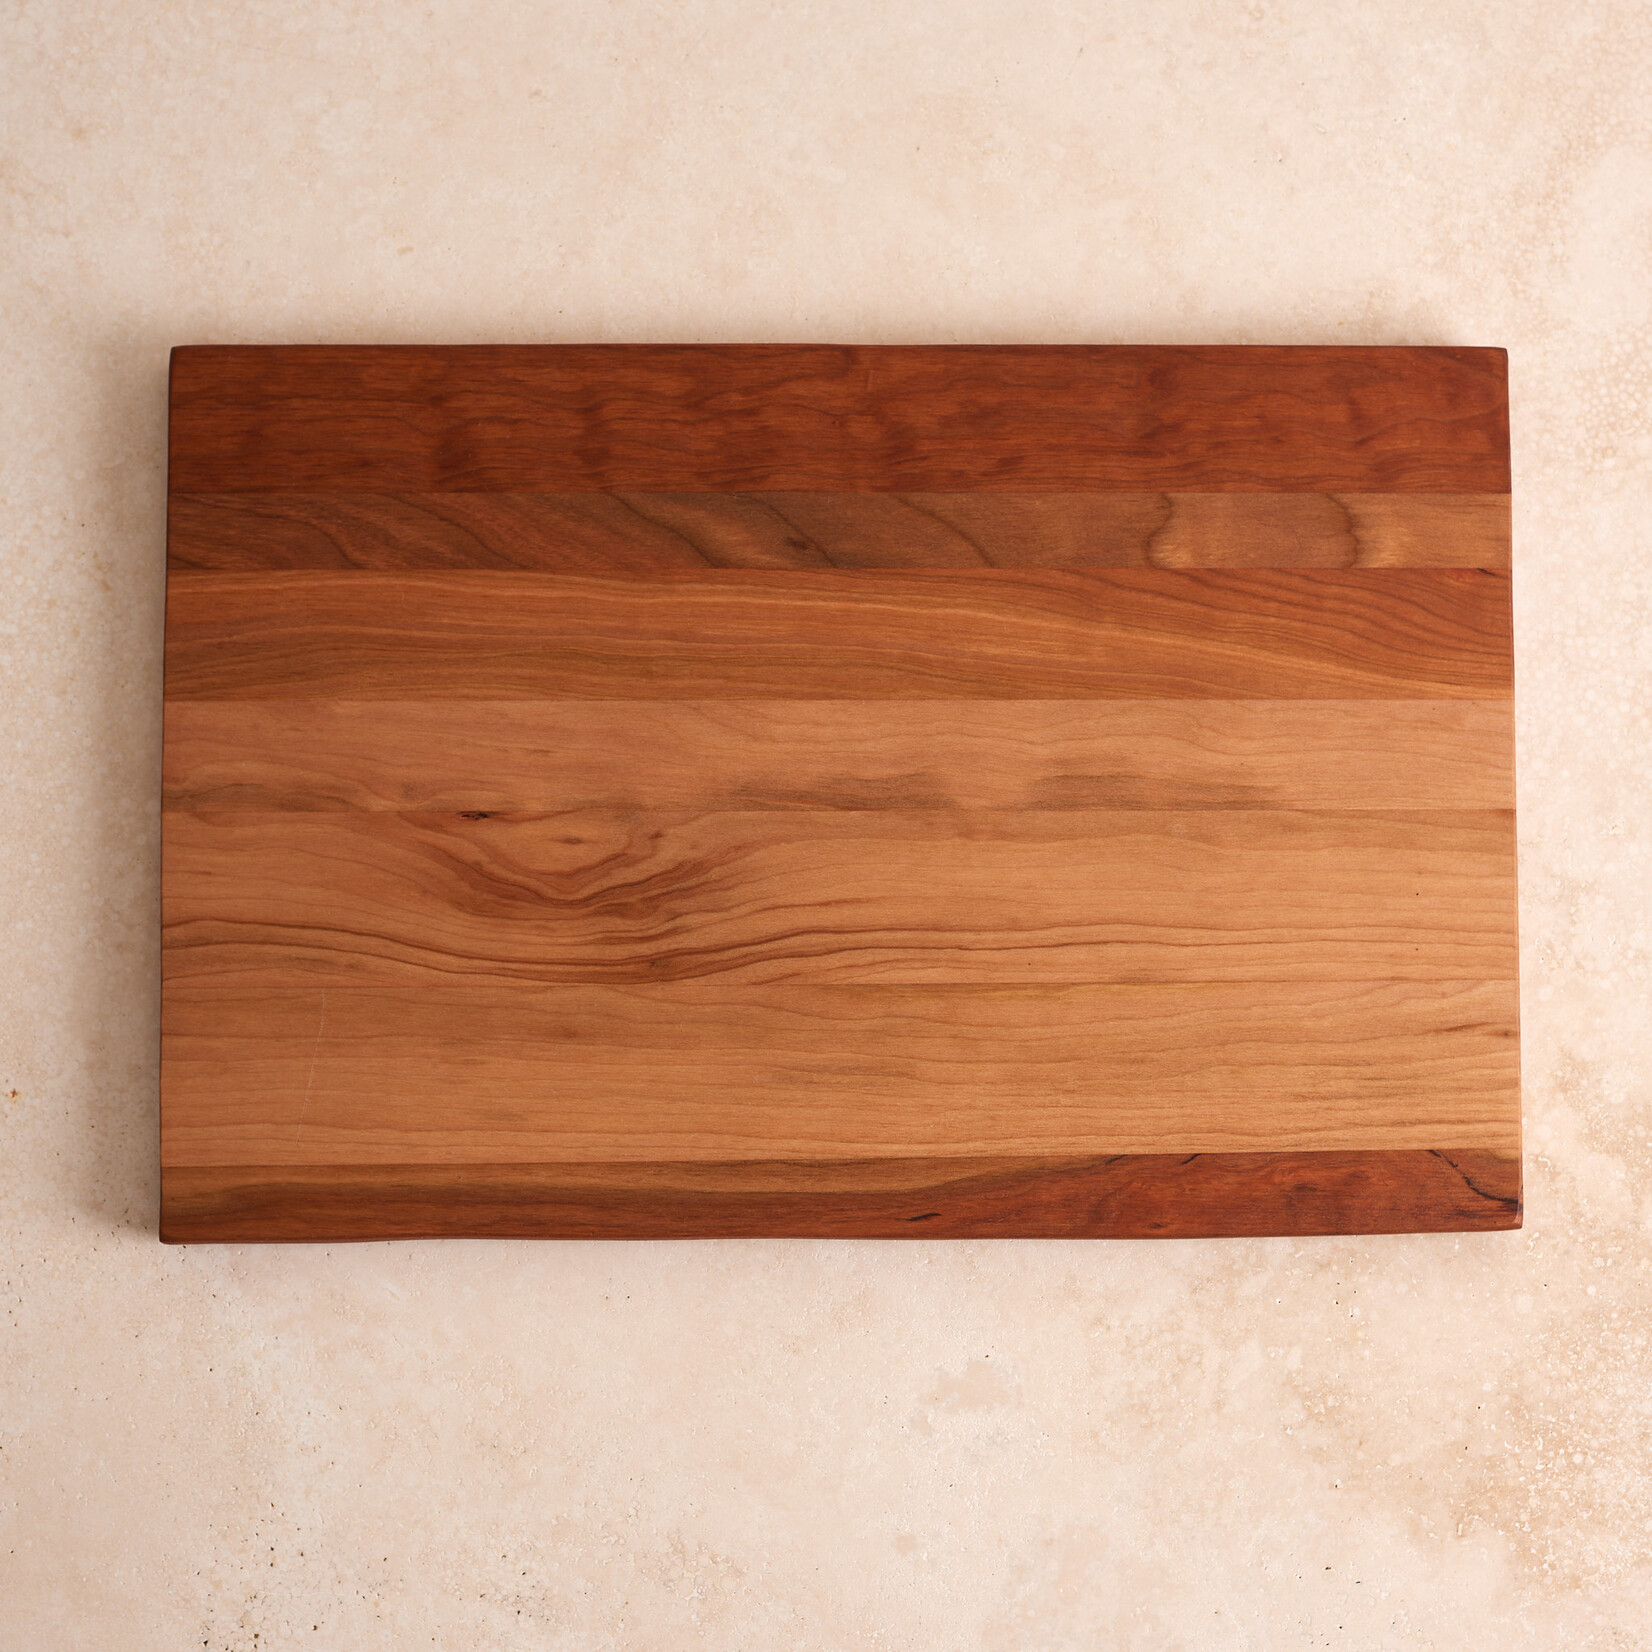 Large Cutting Board- 18x12- cherry